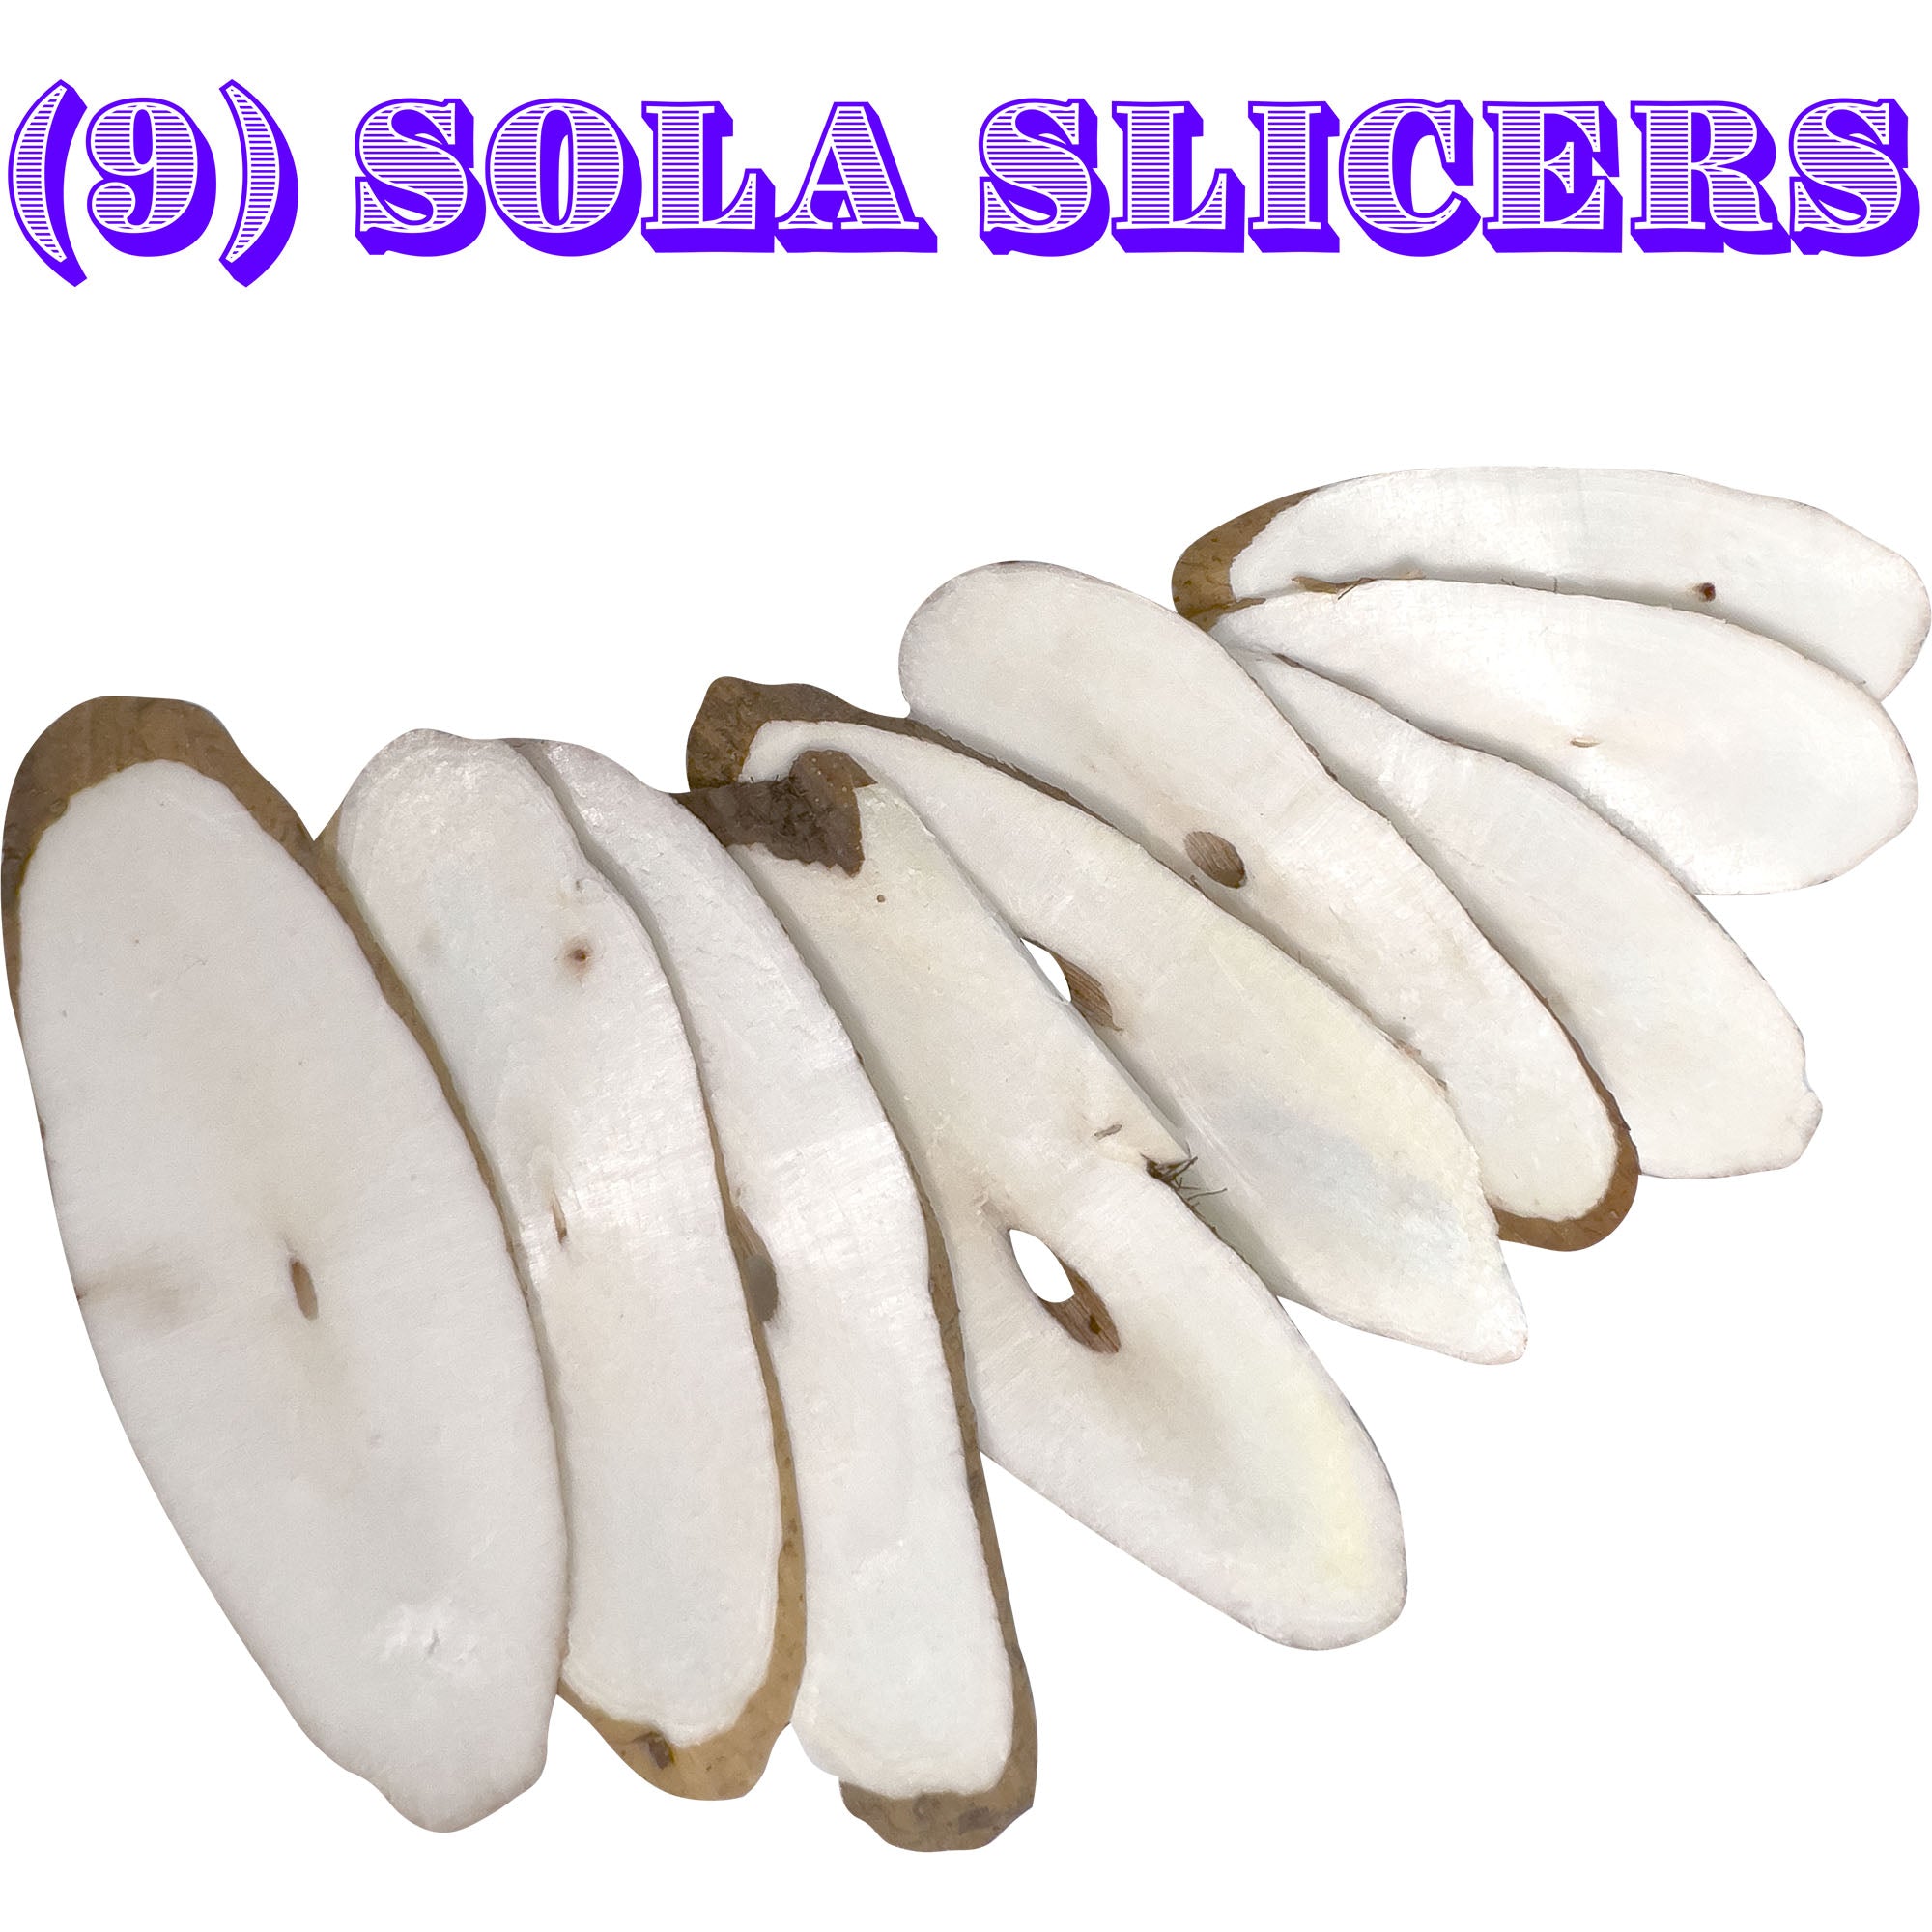 5155 Dainty Sola Platter